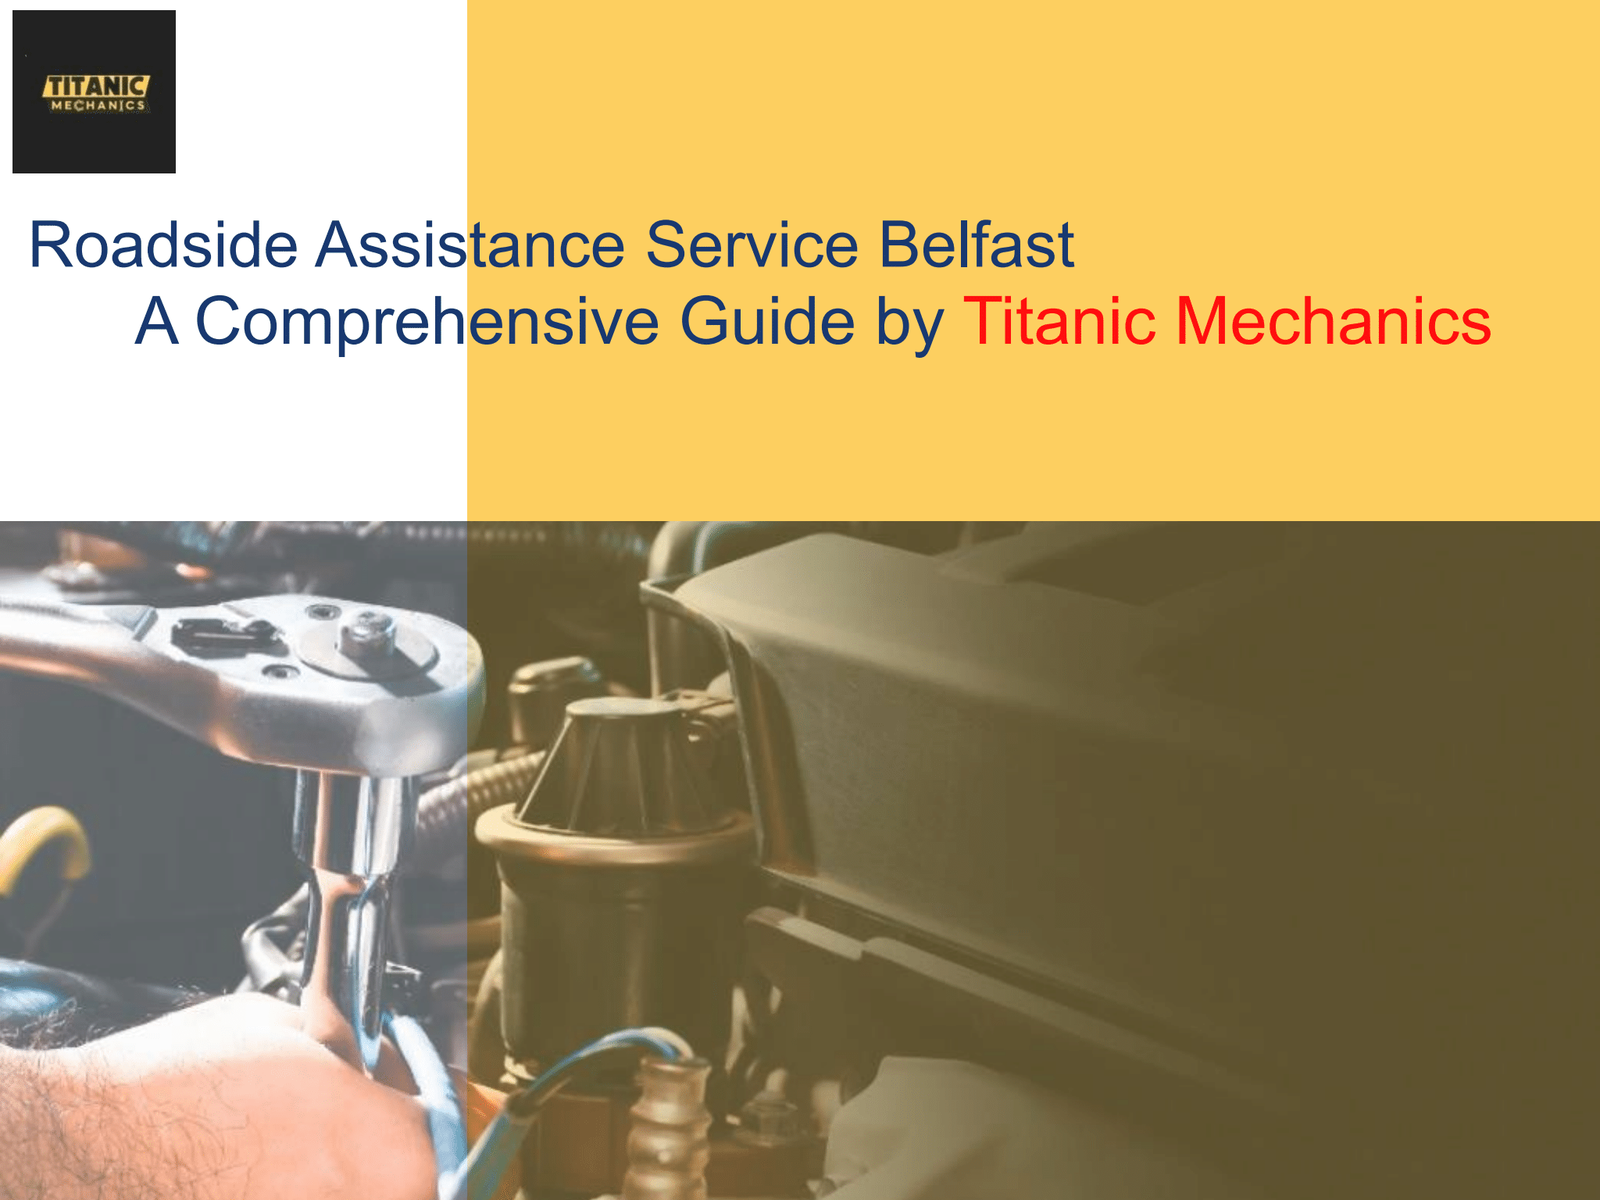 Dropbox - Roadside Assistance Service Belfast A Comprehensive Guide by Titanic Mechanics.pptx - Simplify your life